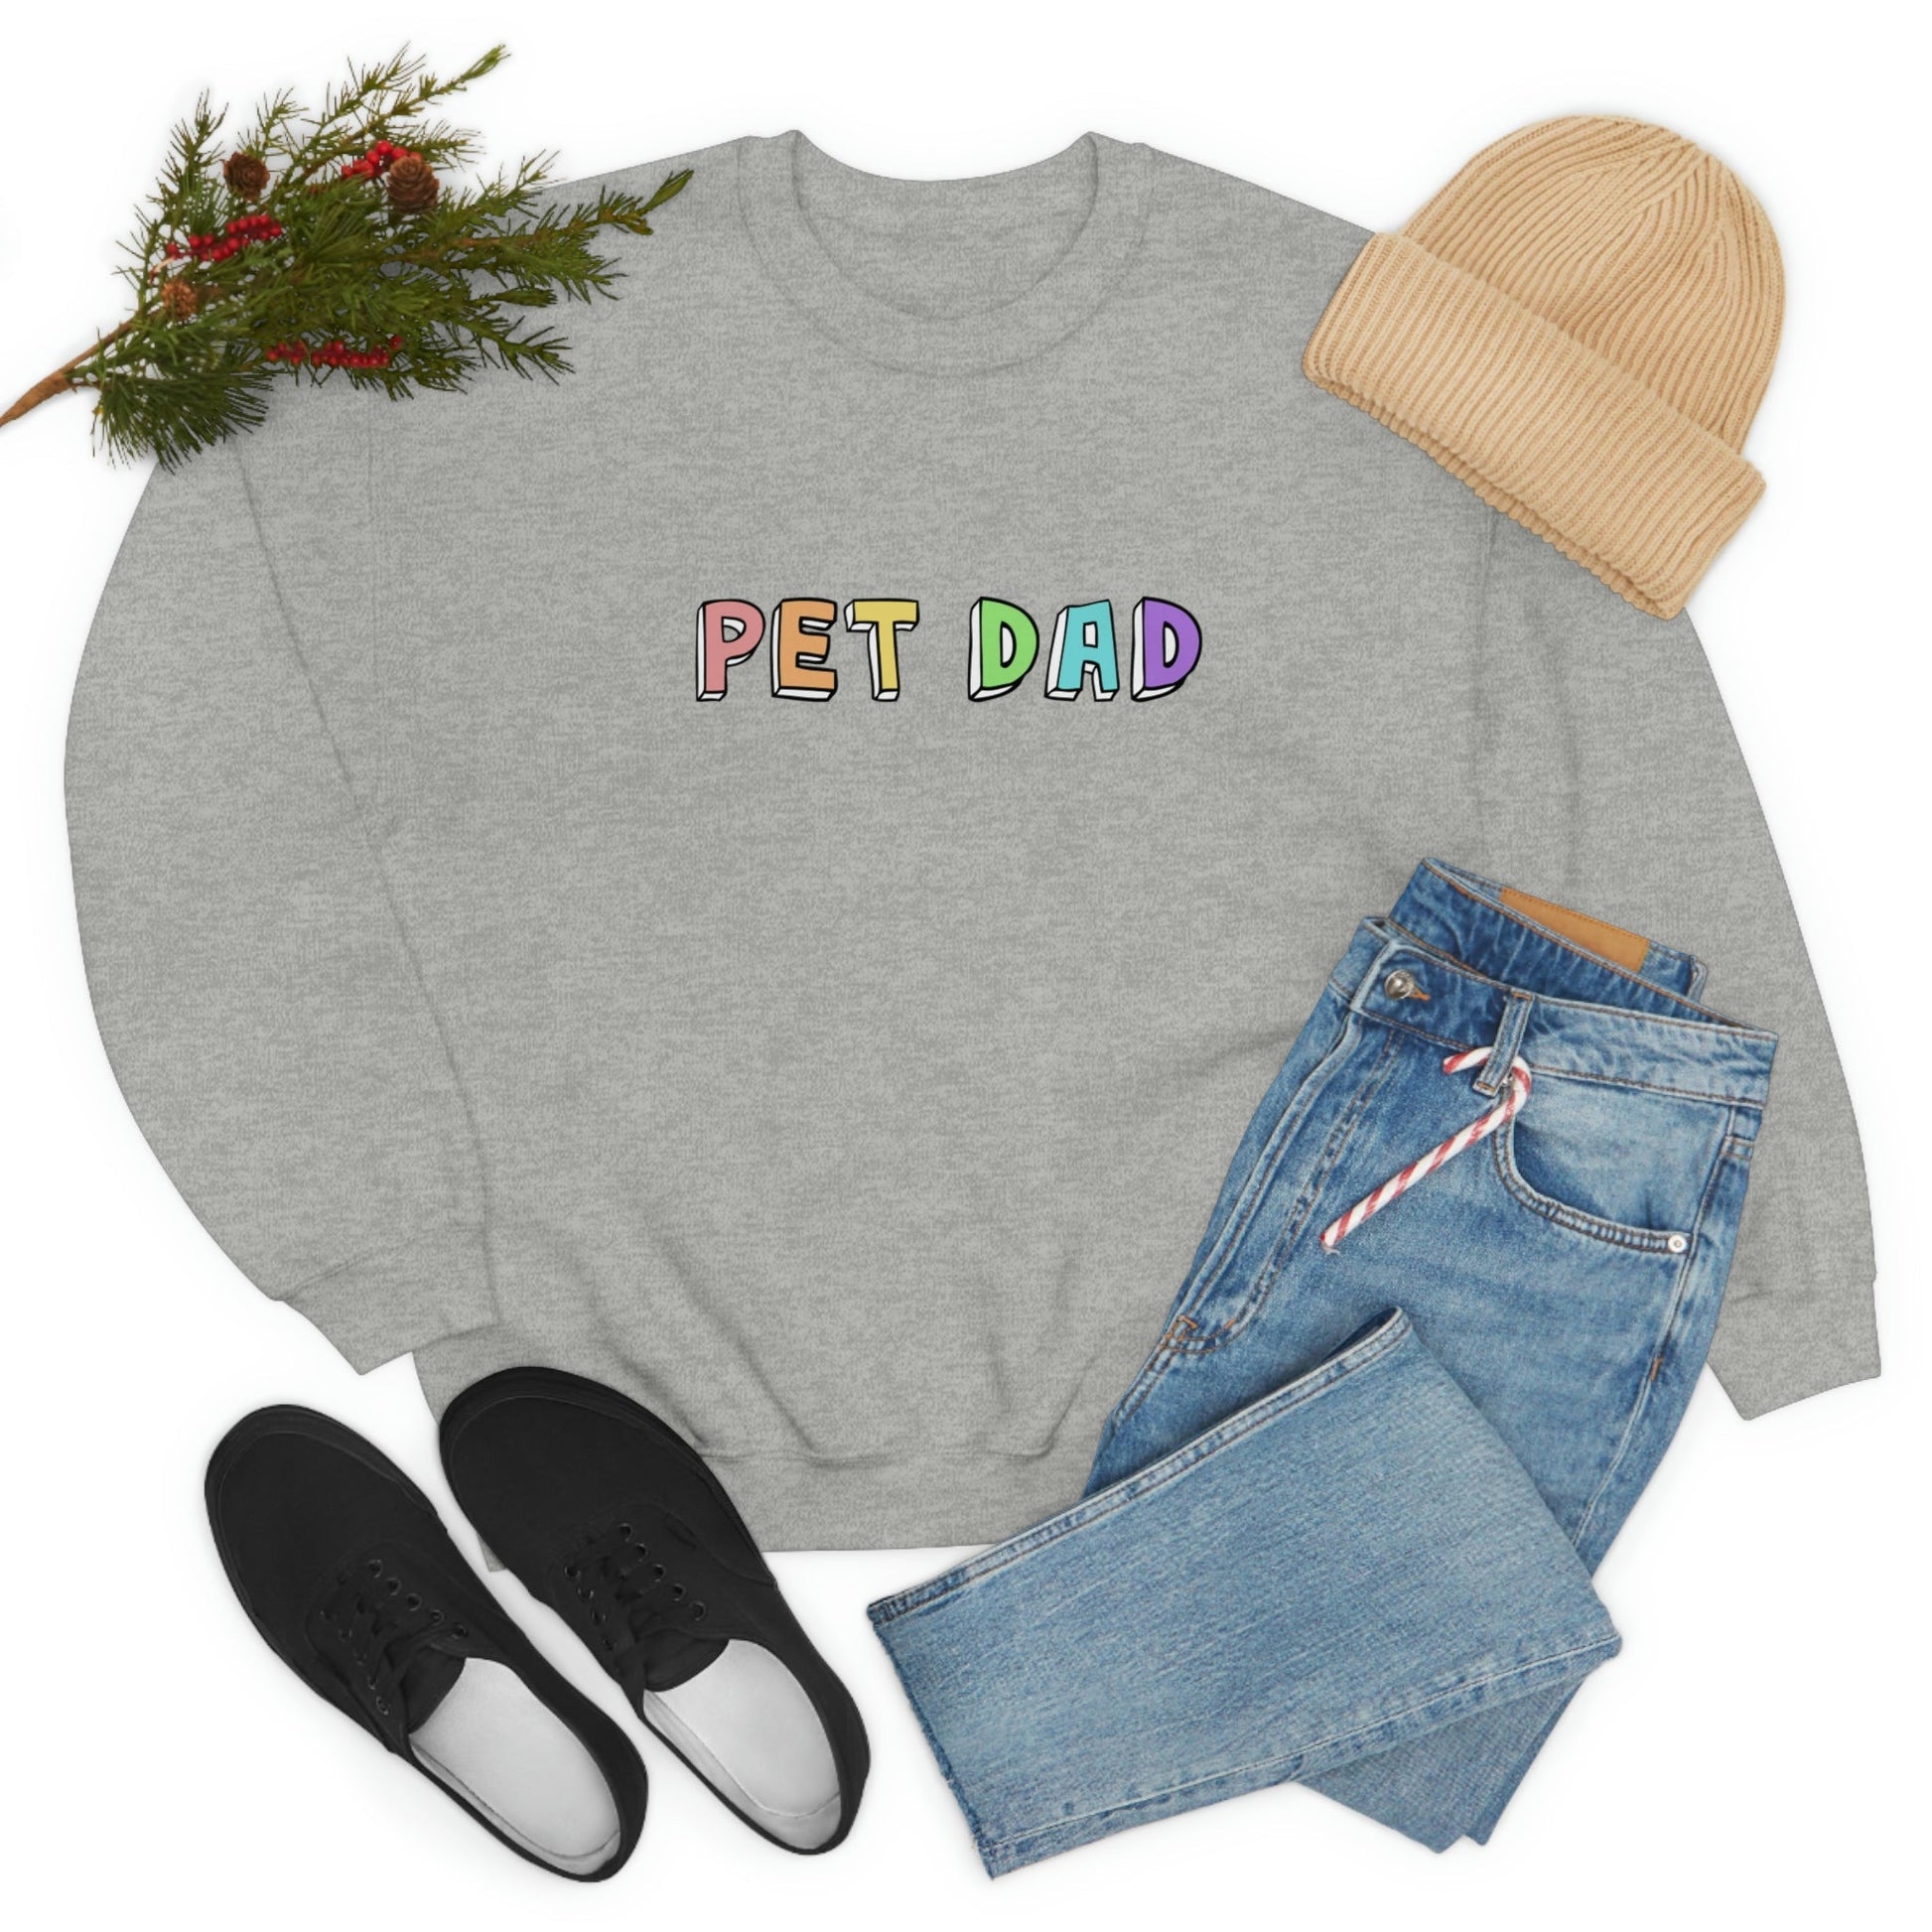 Pet Dad | Crewneck Sweatshirt - Detezi Designs-18456240239423091688